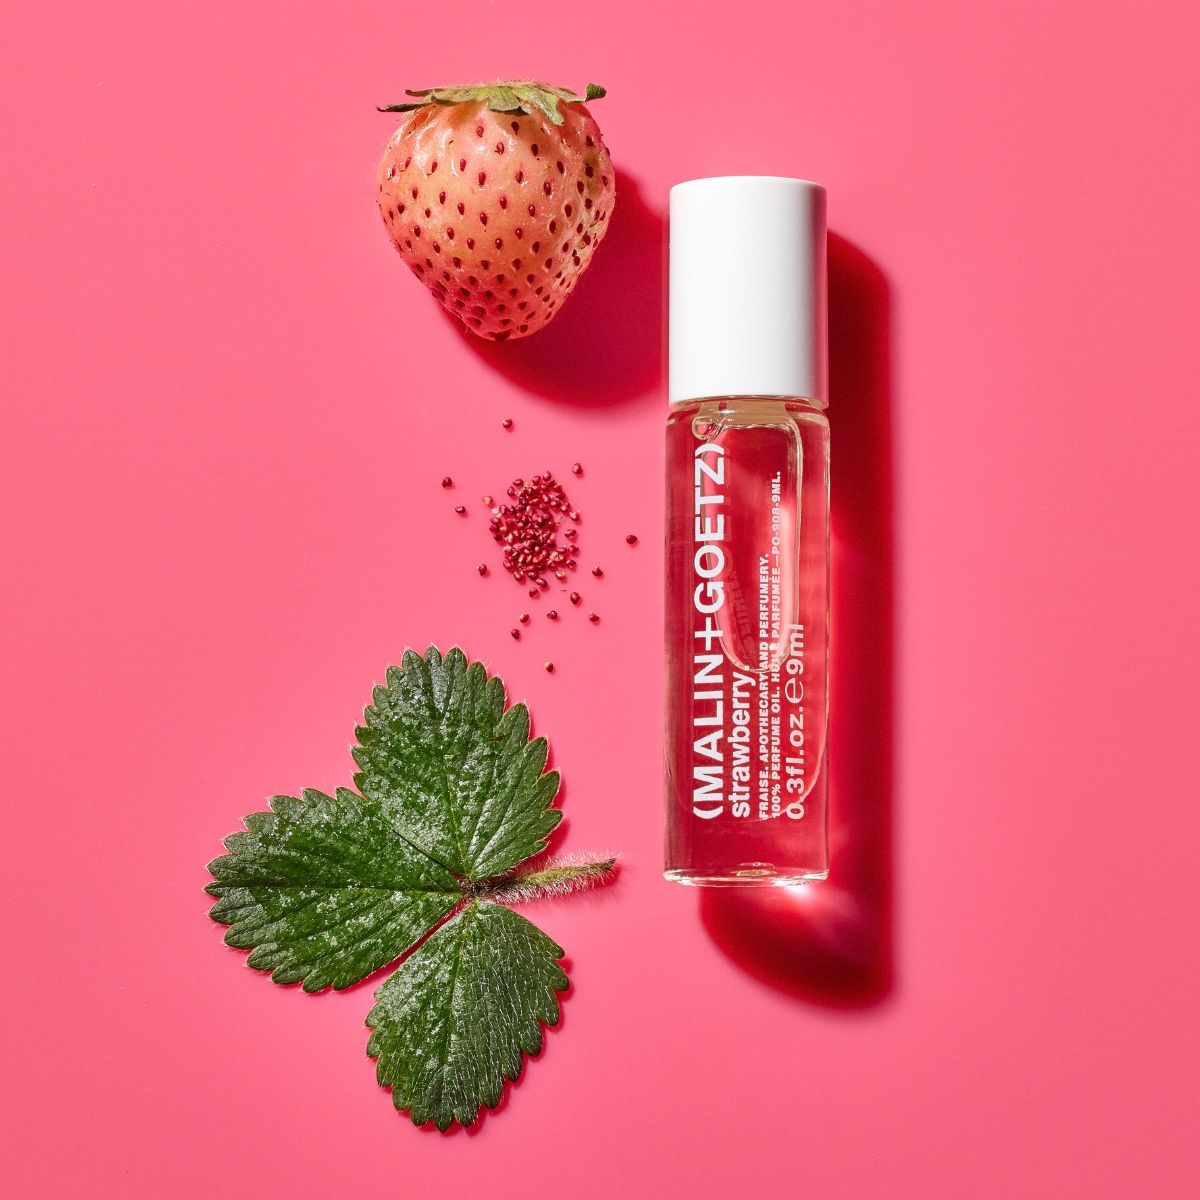 Afbeelding van Strawberry perfume oil van het merk Malin + Goetz